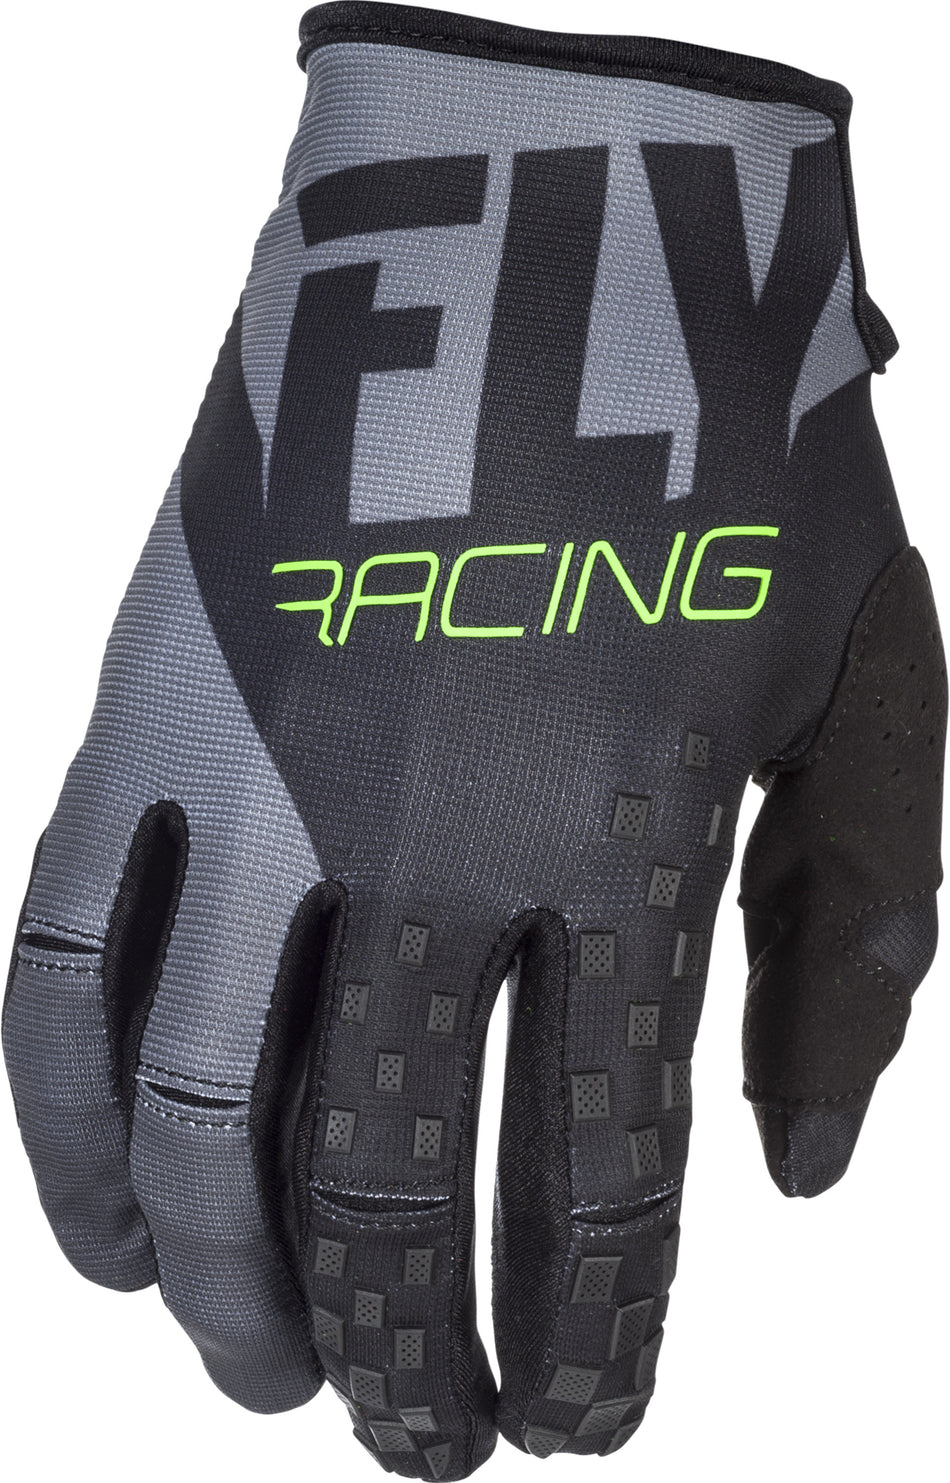 FLY RACING Kinetic Gloves Black/Grey Sz 13 371-41013